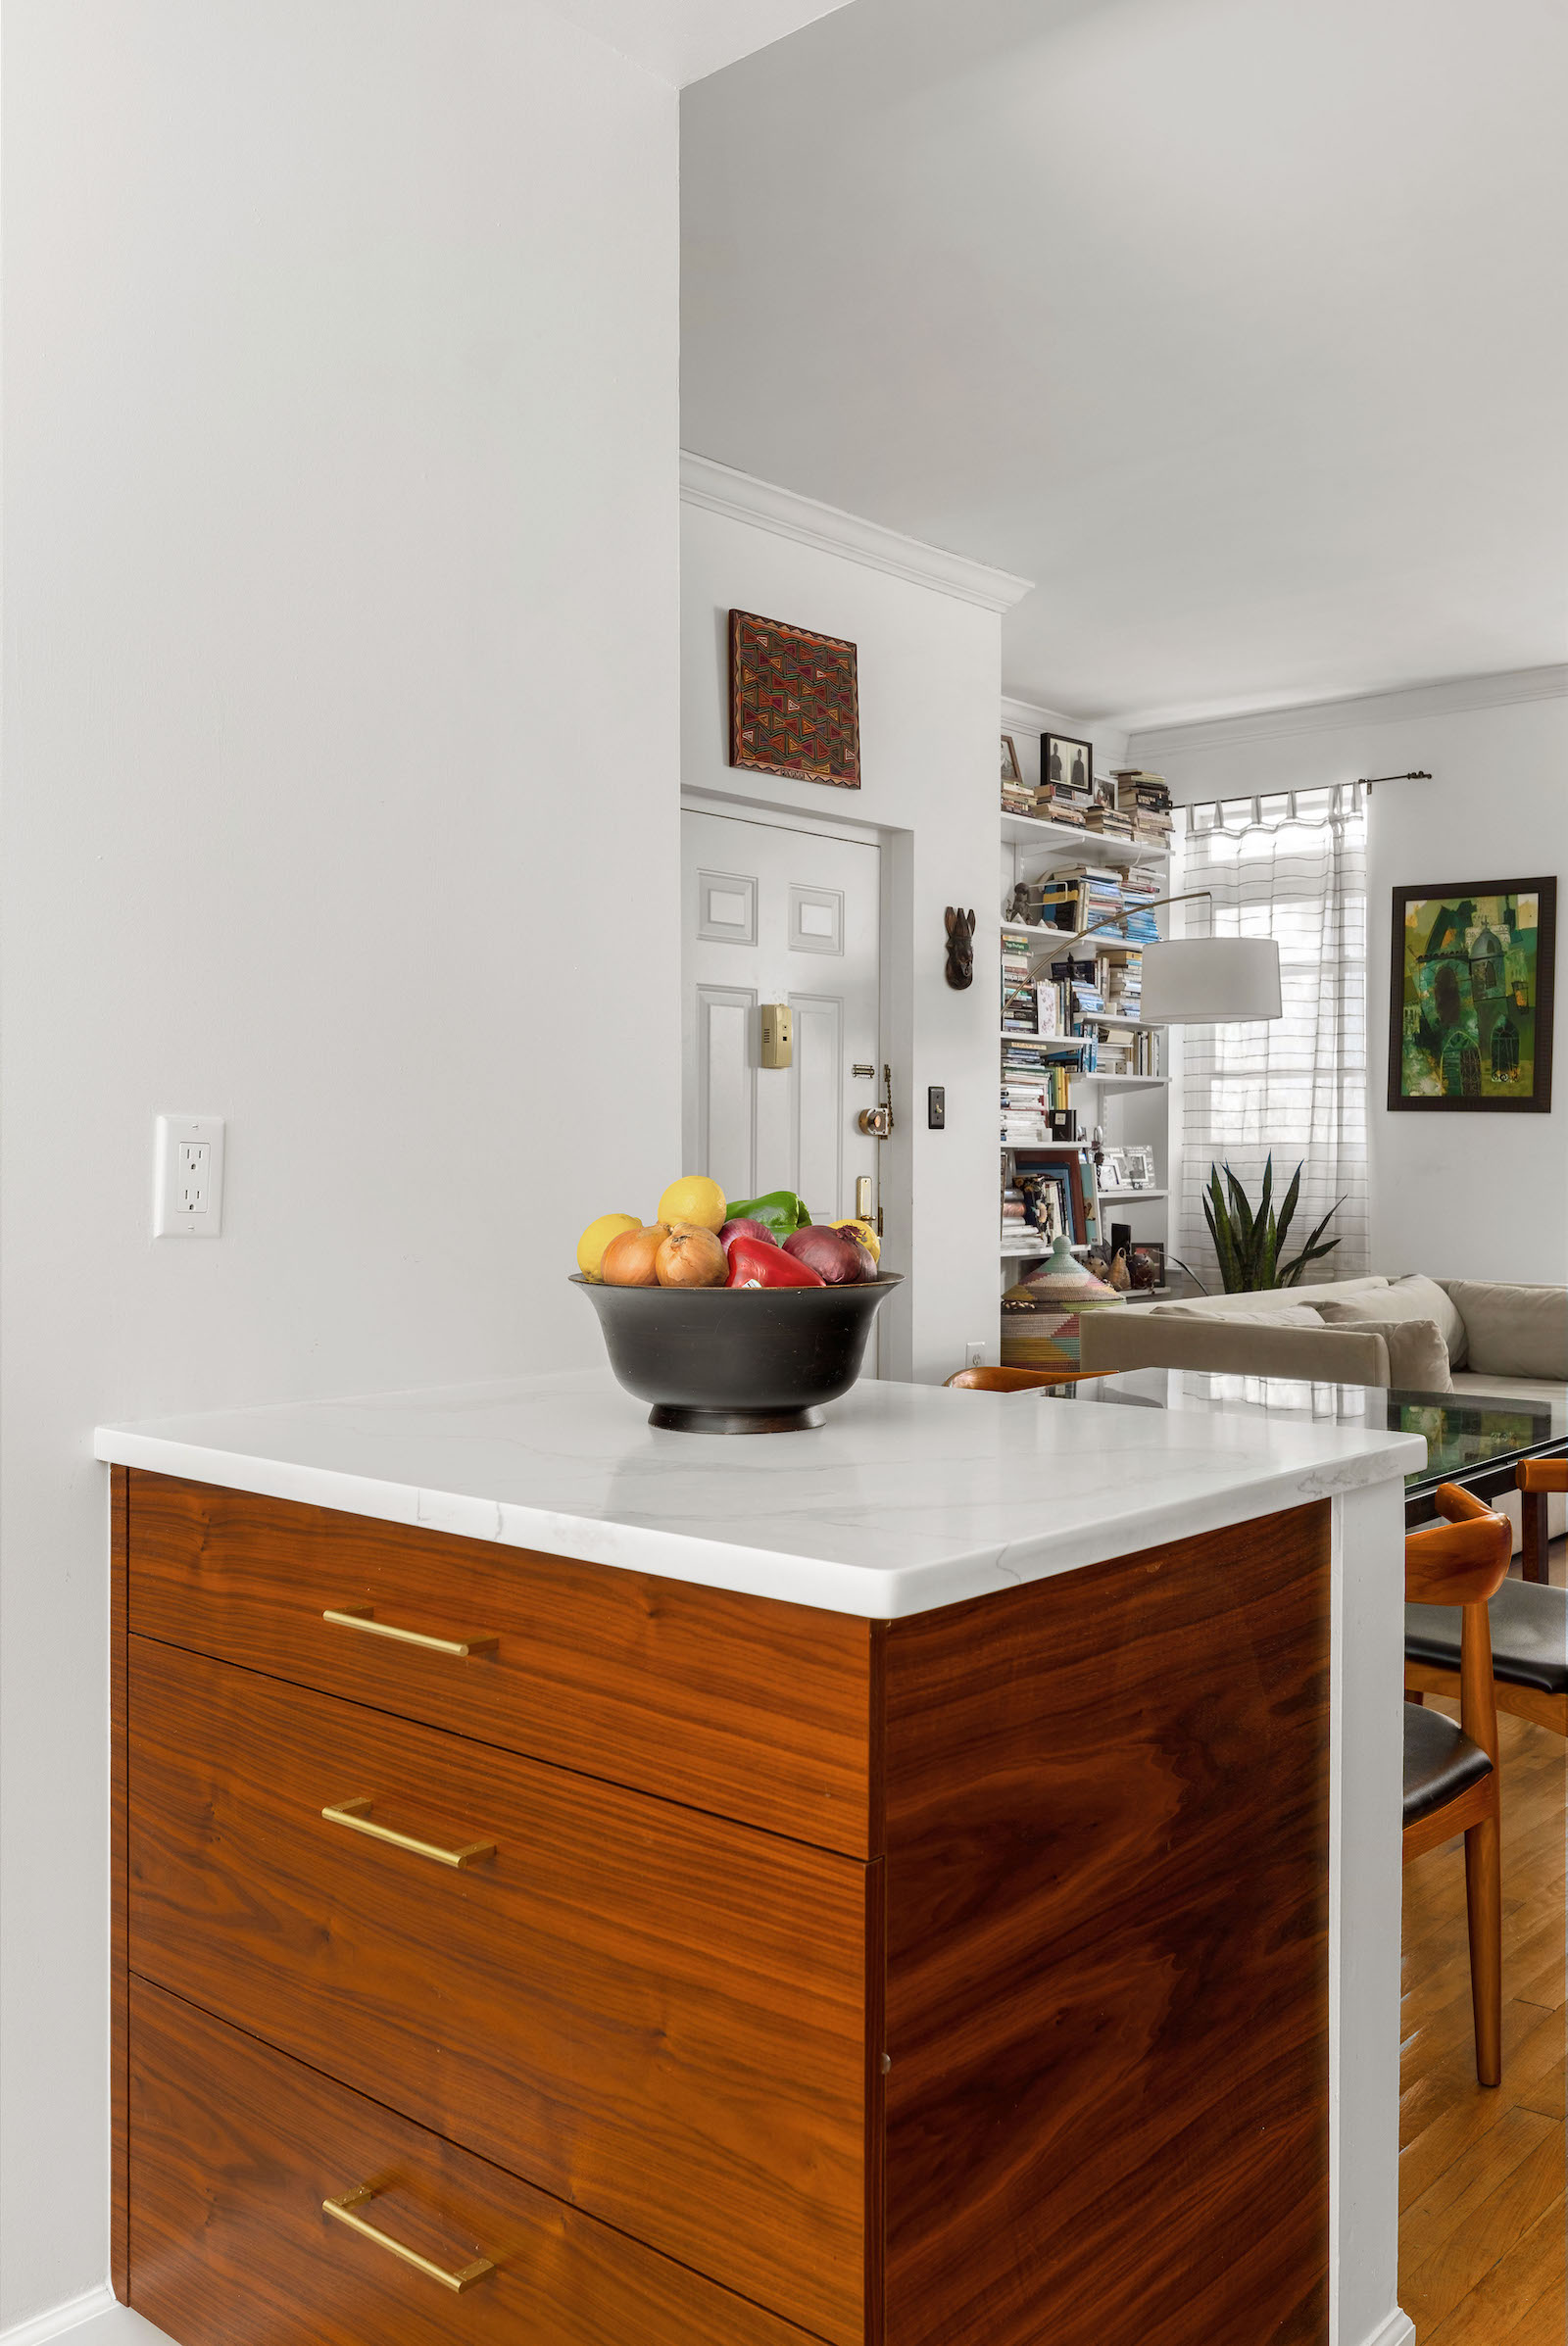 small kitchen remodel with cabinet size peninsula and quartz backsplash bedford-stuyvesant